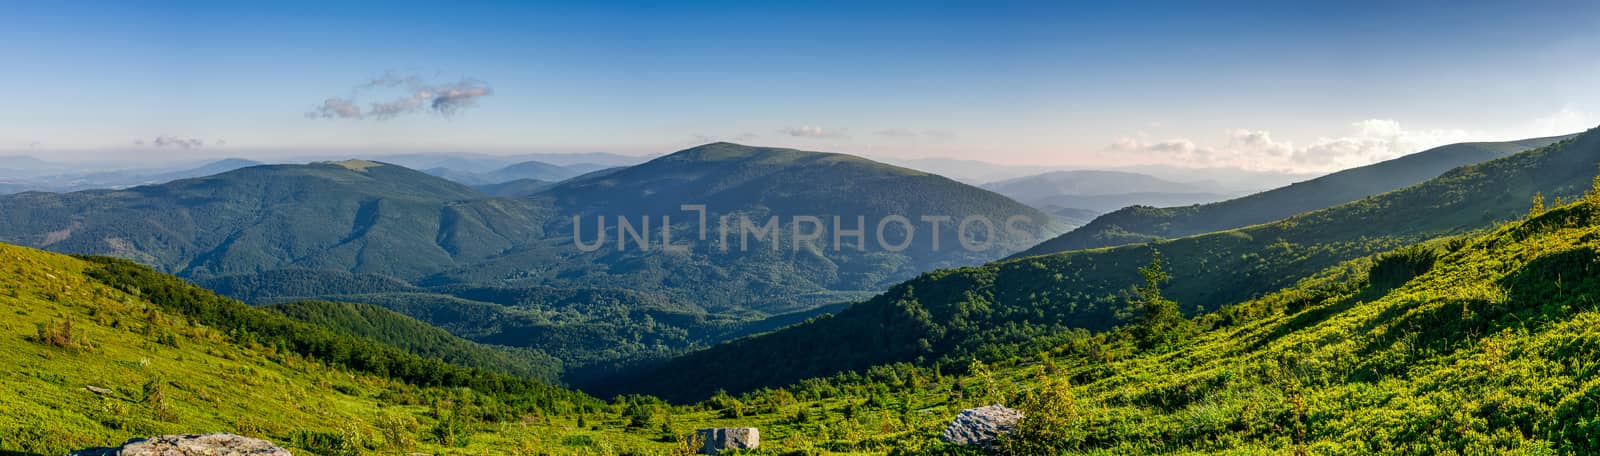 panorama of mountain ridge in summer by Pellinni